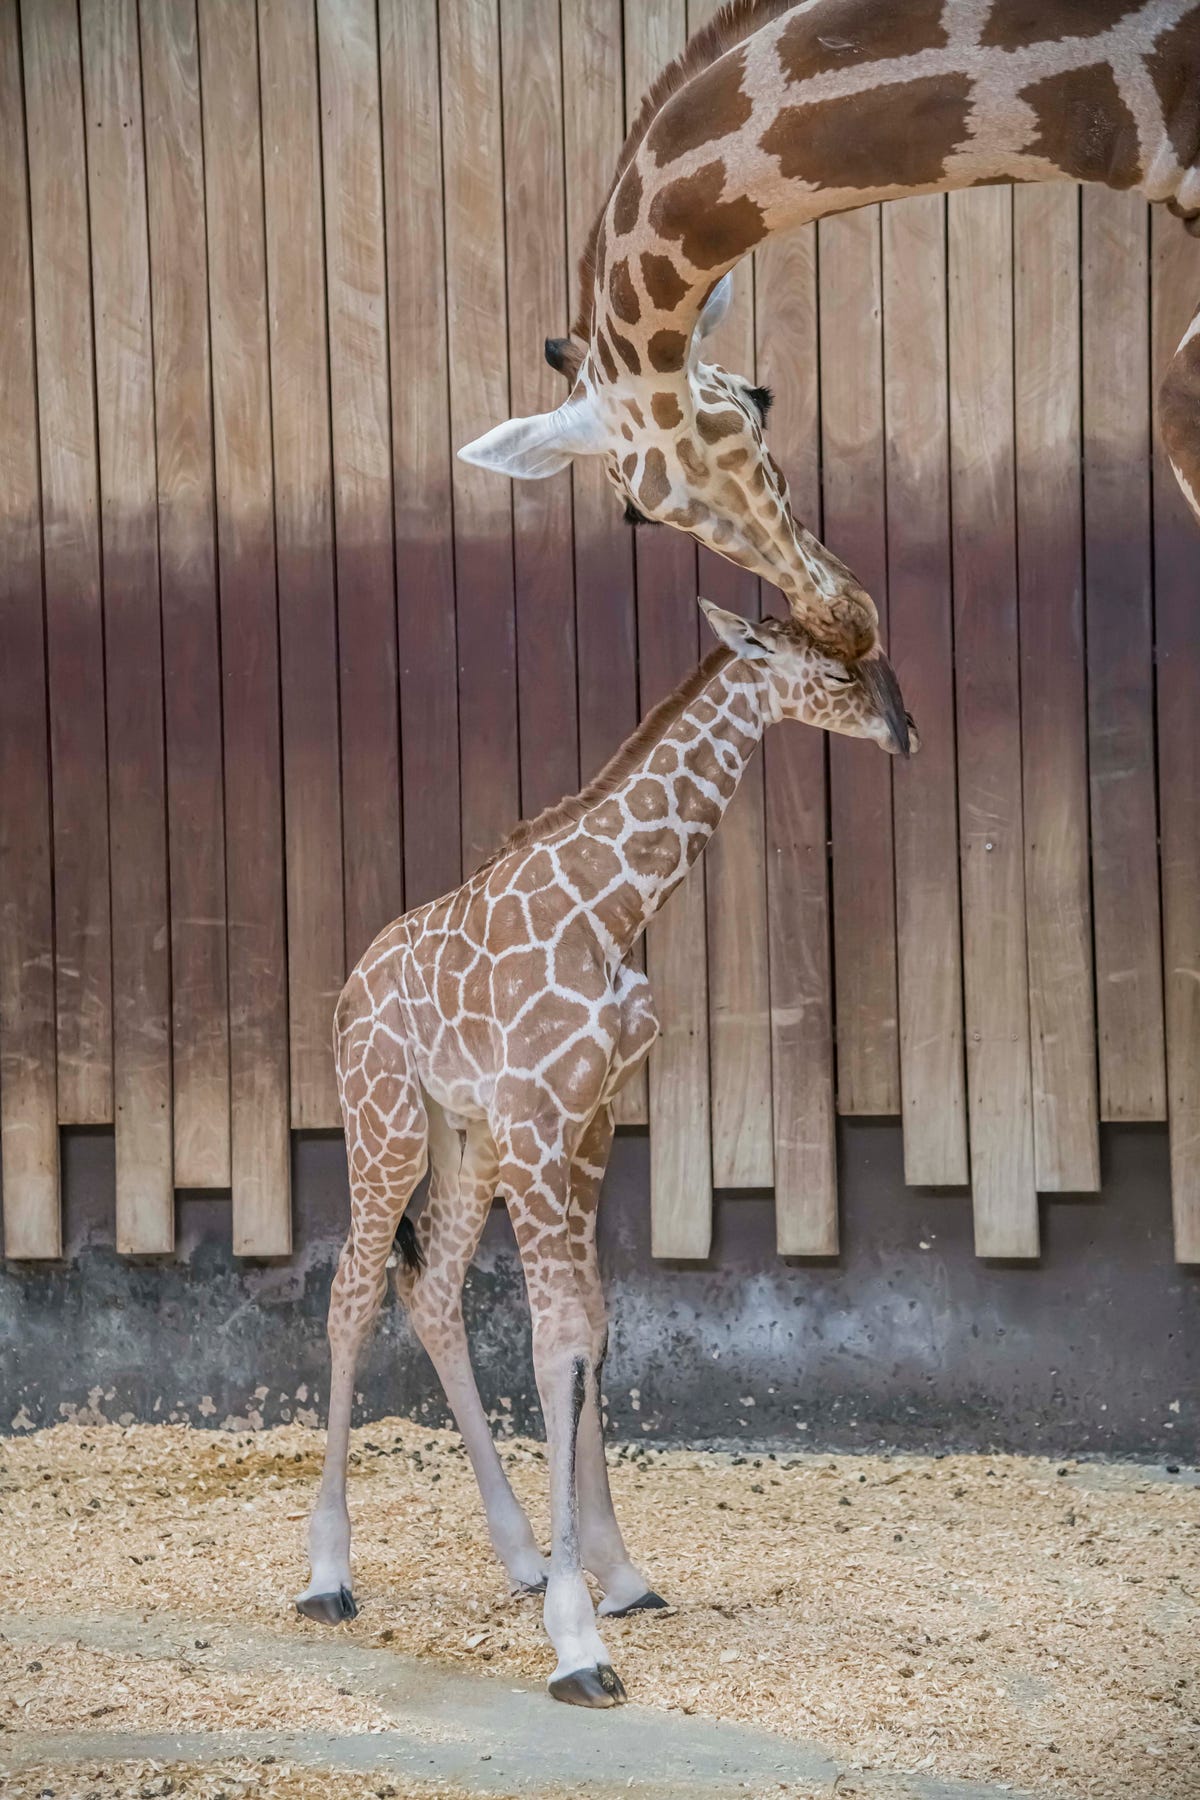 Menagerry Samengesteld schroot Milwaukee County Zoo welcomes baby giraffe to mom Marlee, dad Bahatika